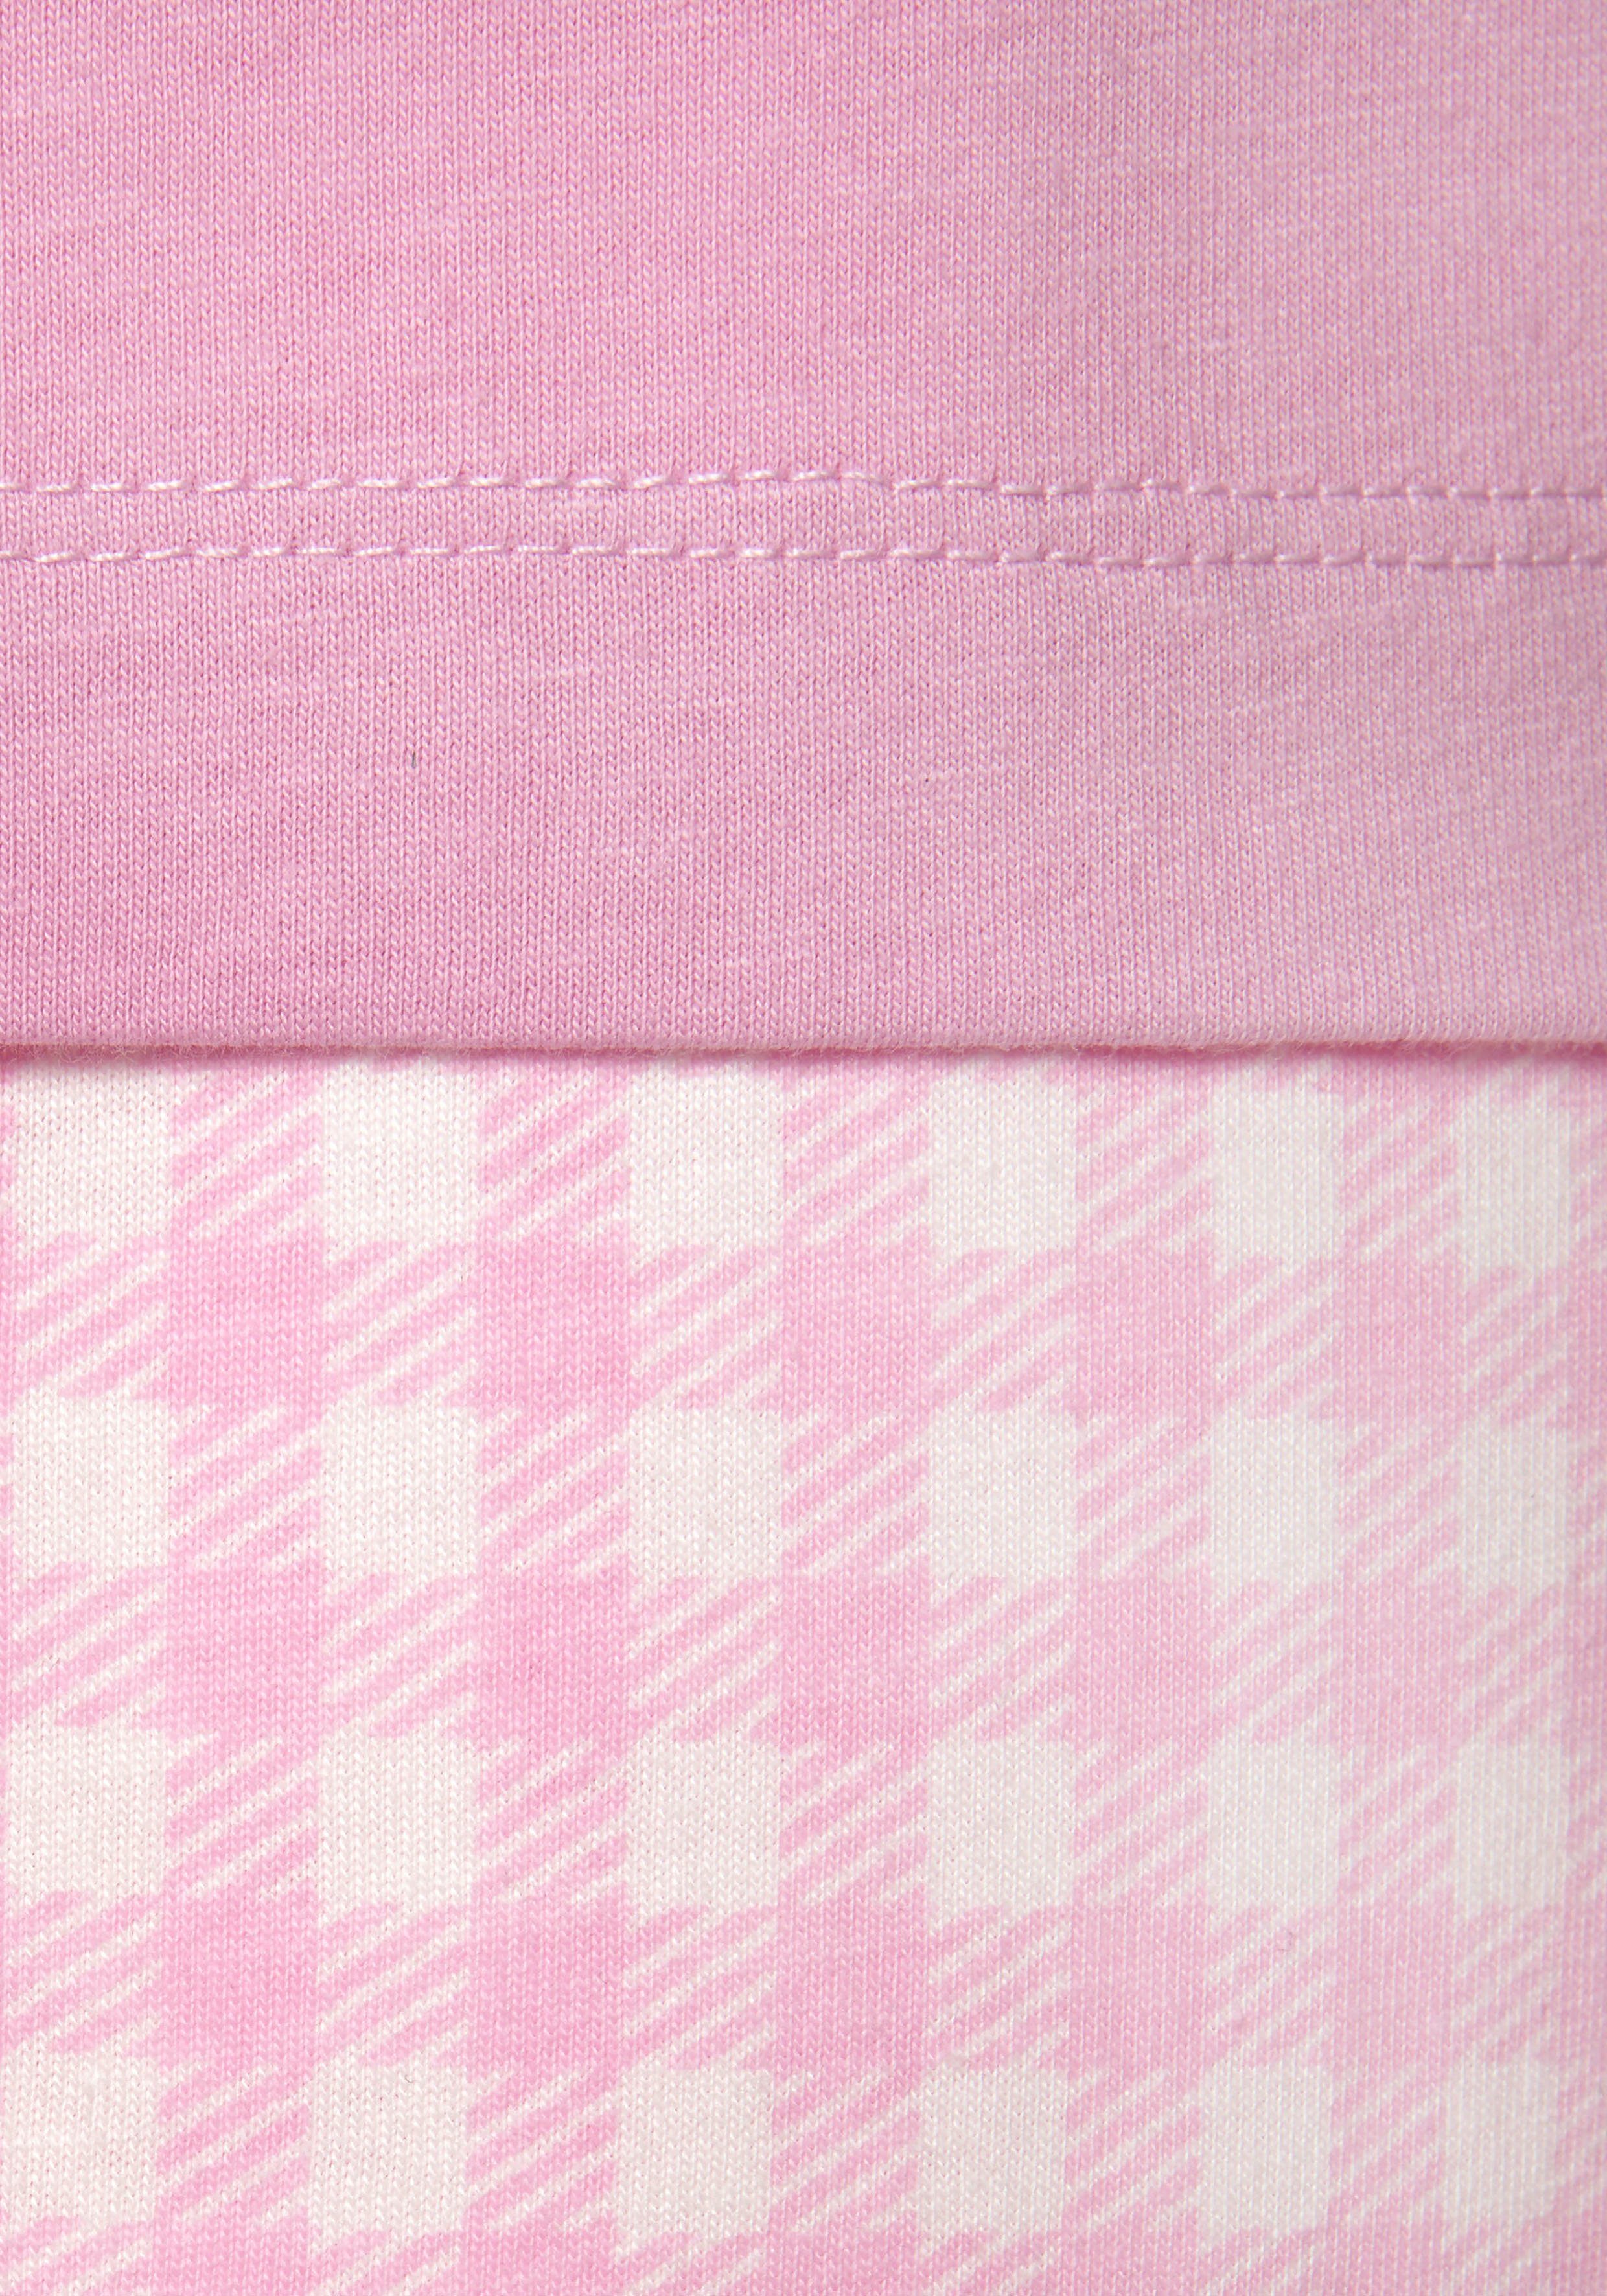 Pyjama 1 rosa-kariert (2 Stück) tlg., s.Oliver